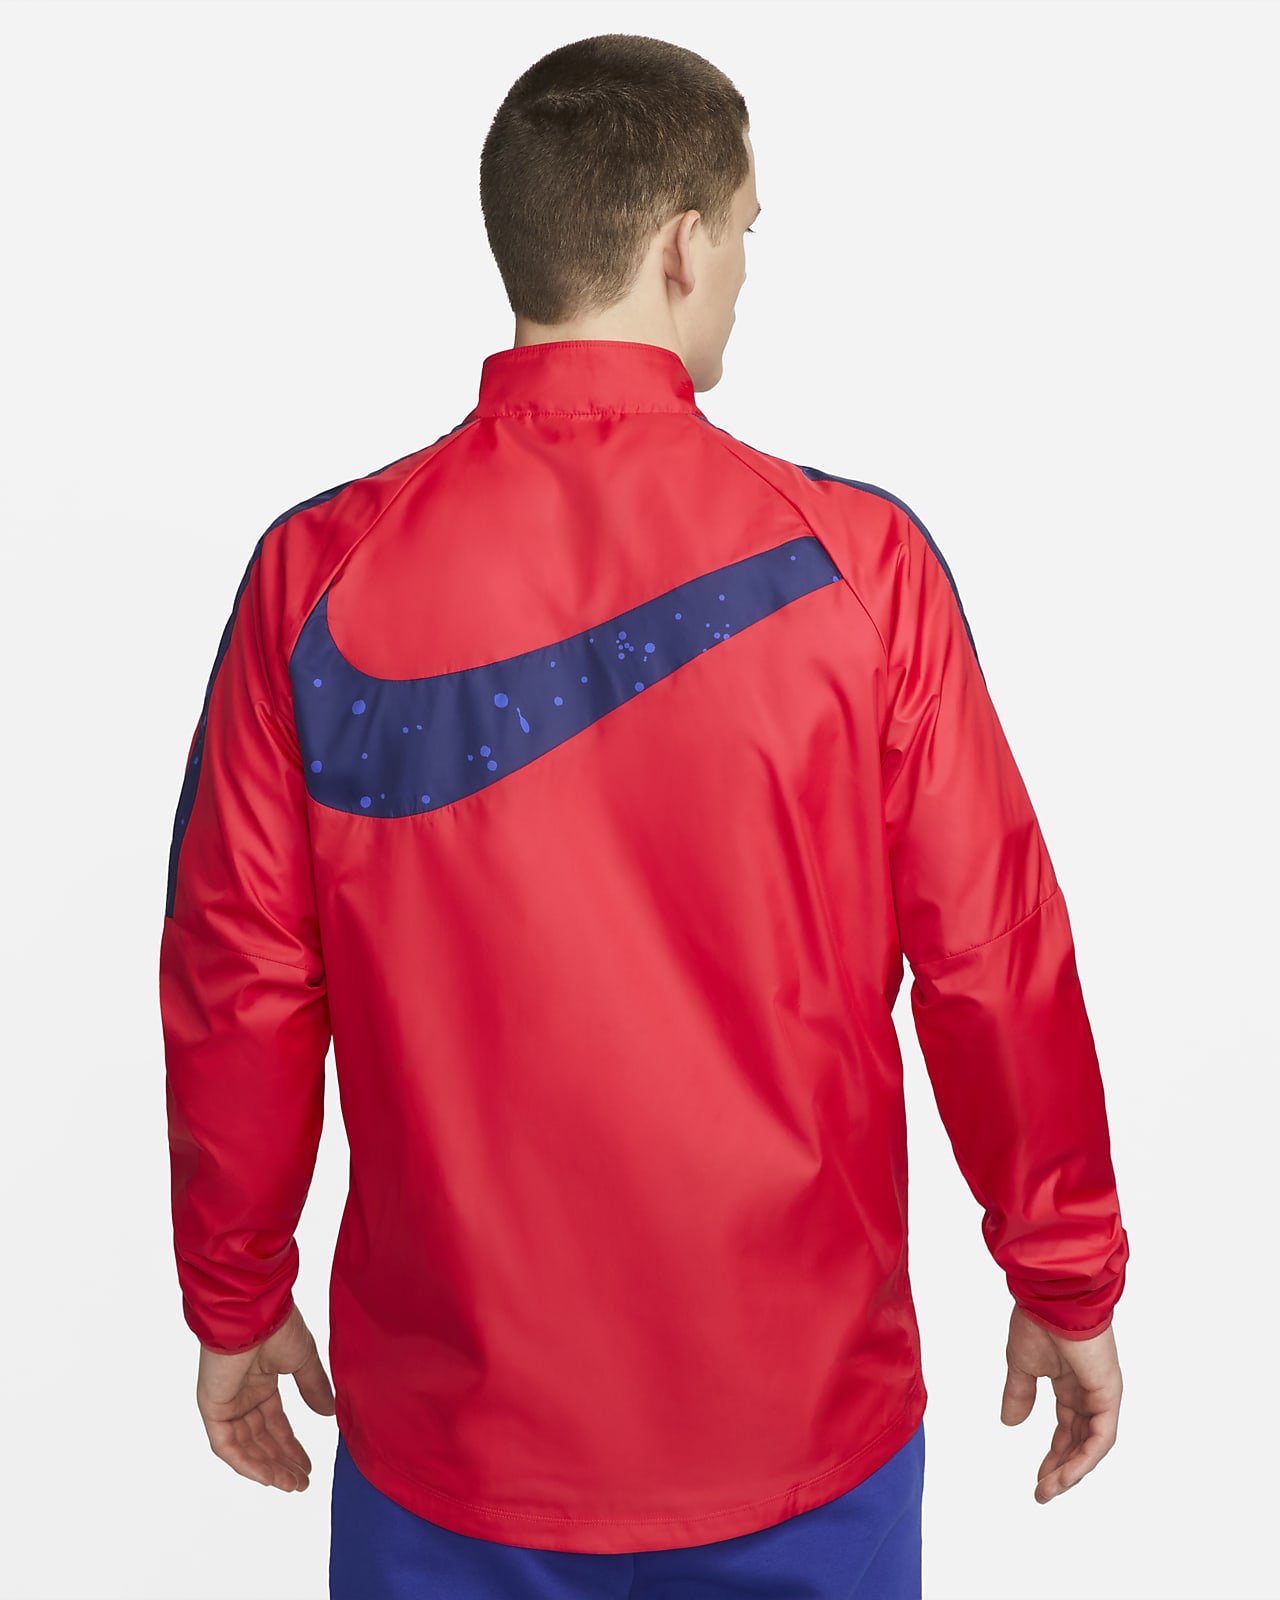 Nike Men's Repel Lightweight Soccer Jacket